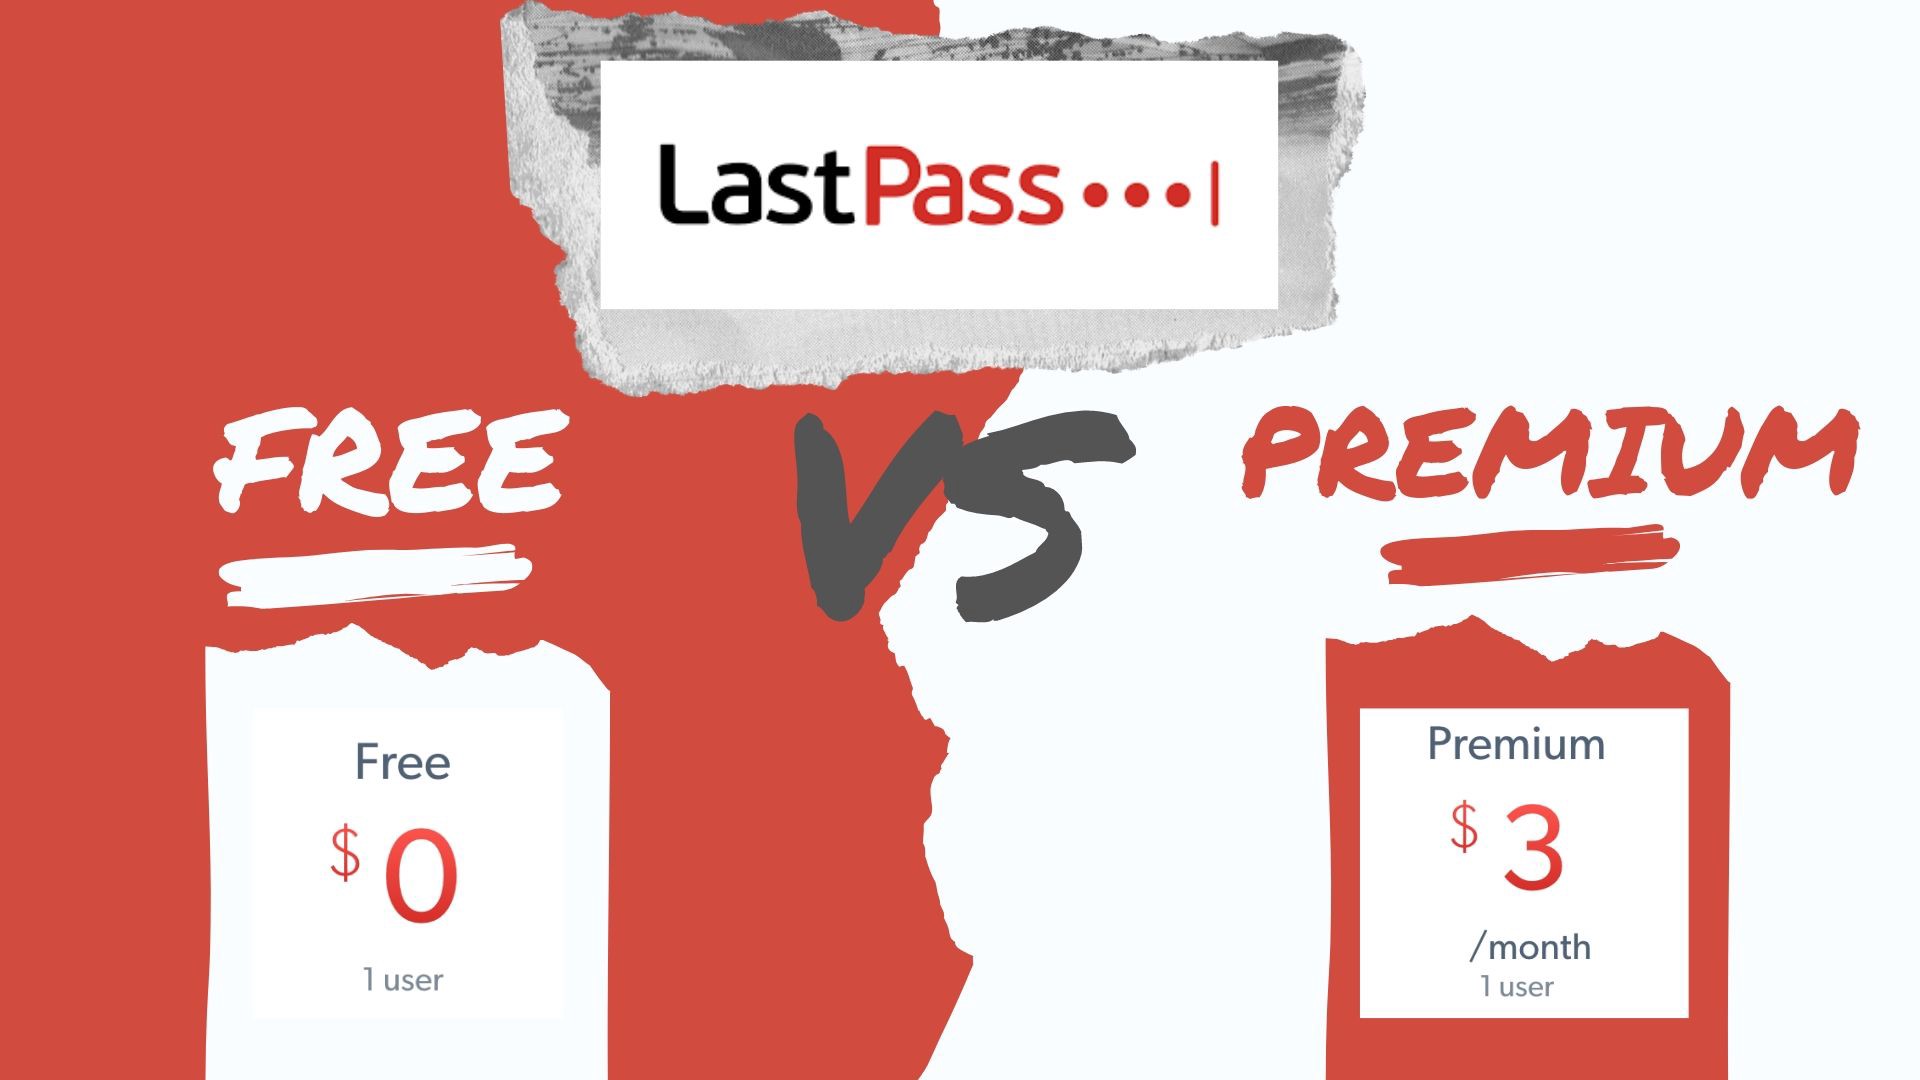 Lastpass Free VS Premium